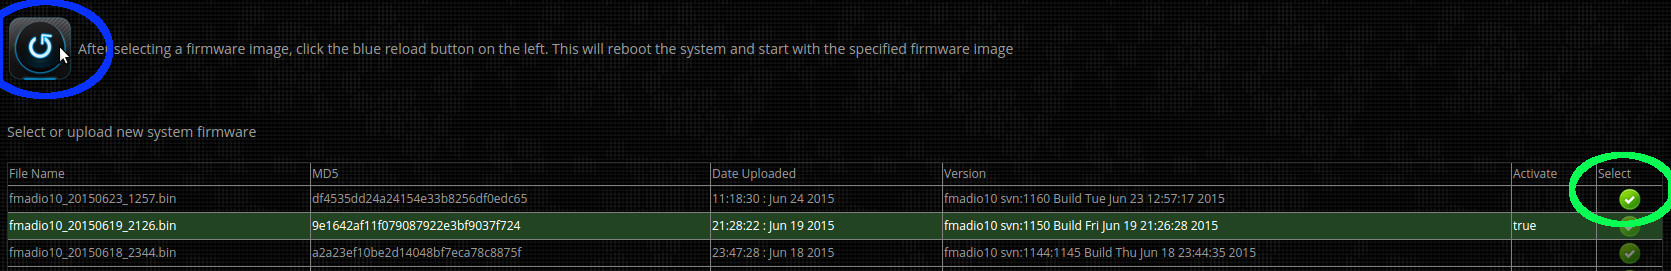 10g packet capture firmware update upload